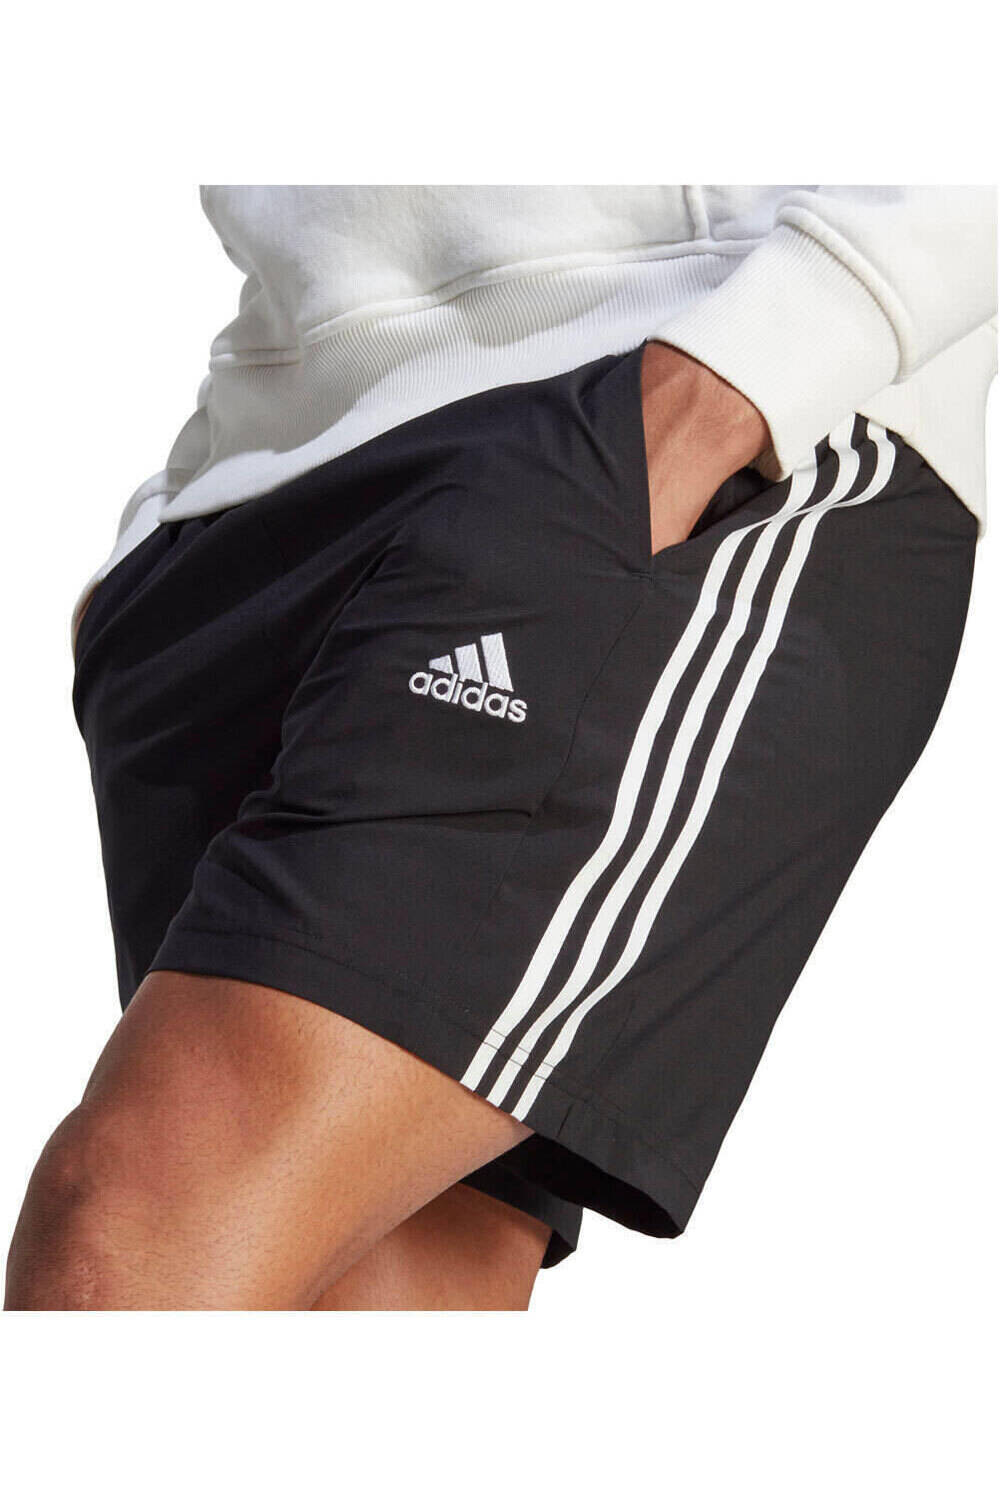 Comprar en oferta Adidas Essentials Fleece 3-Stripes Pants black/white